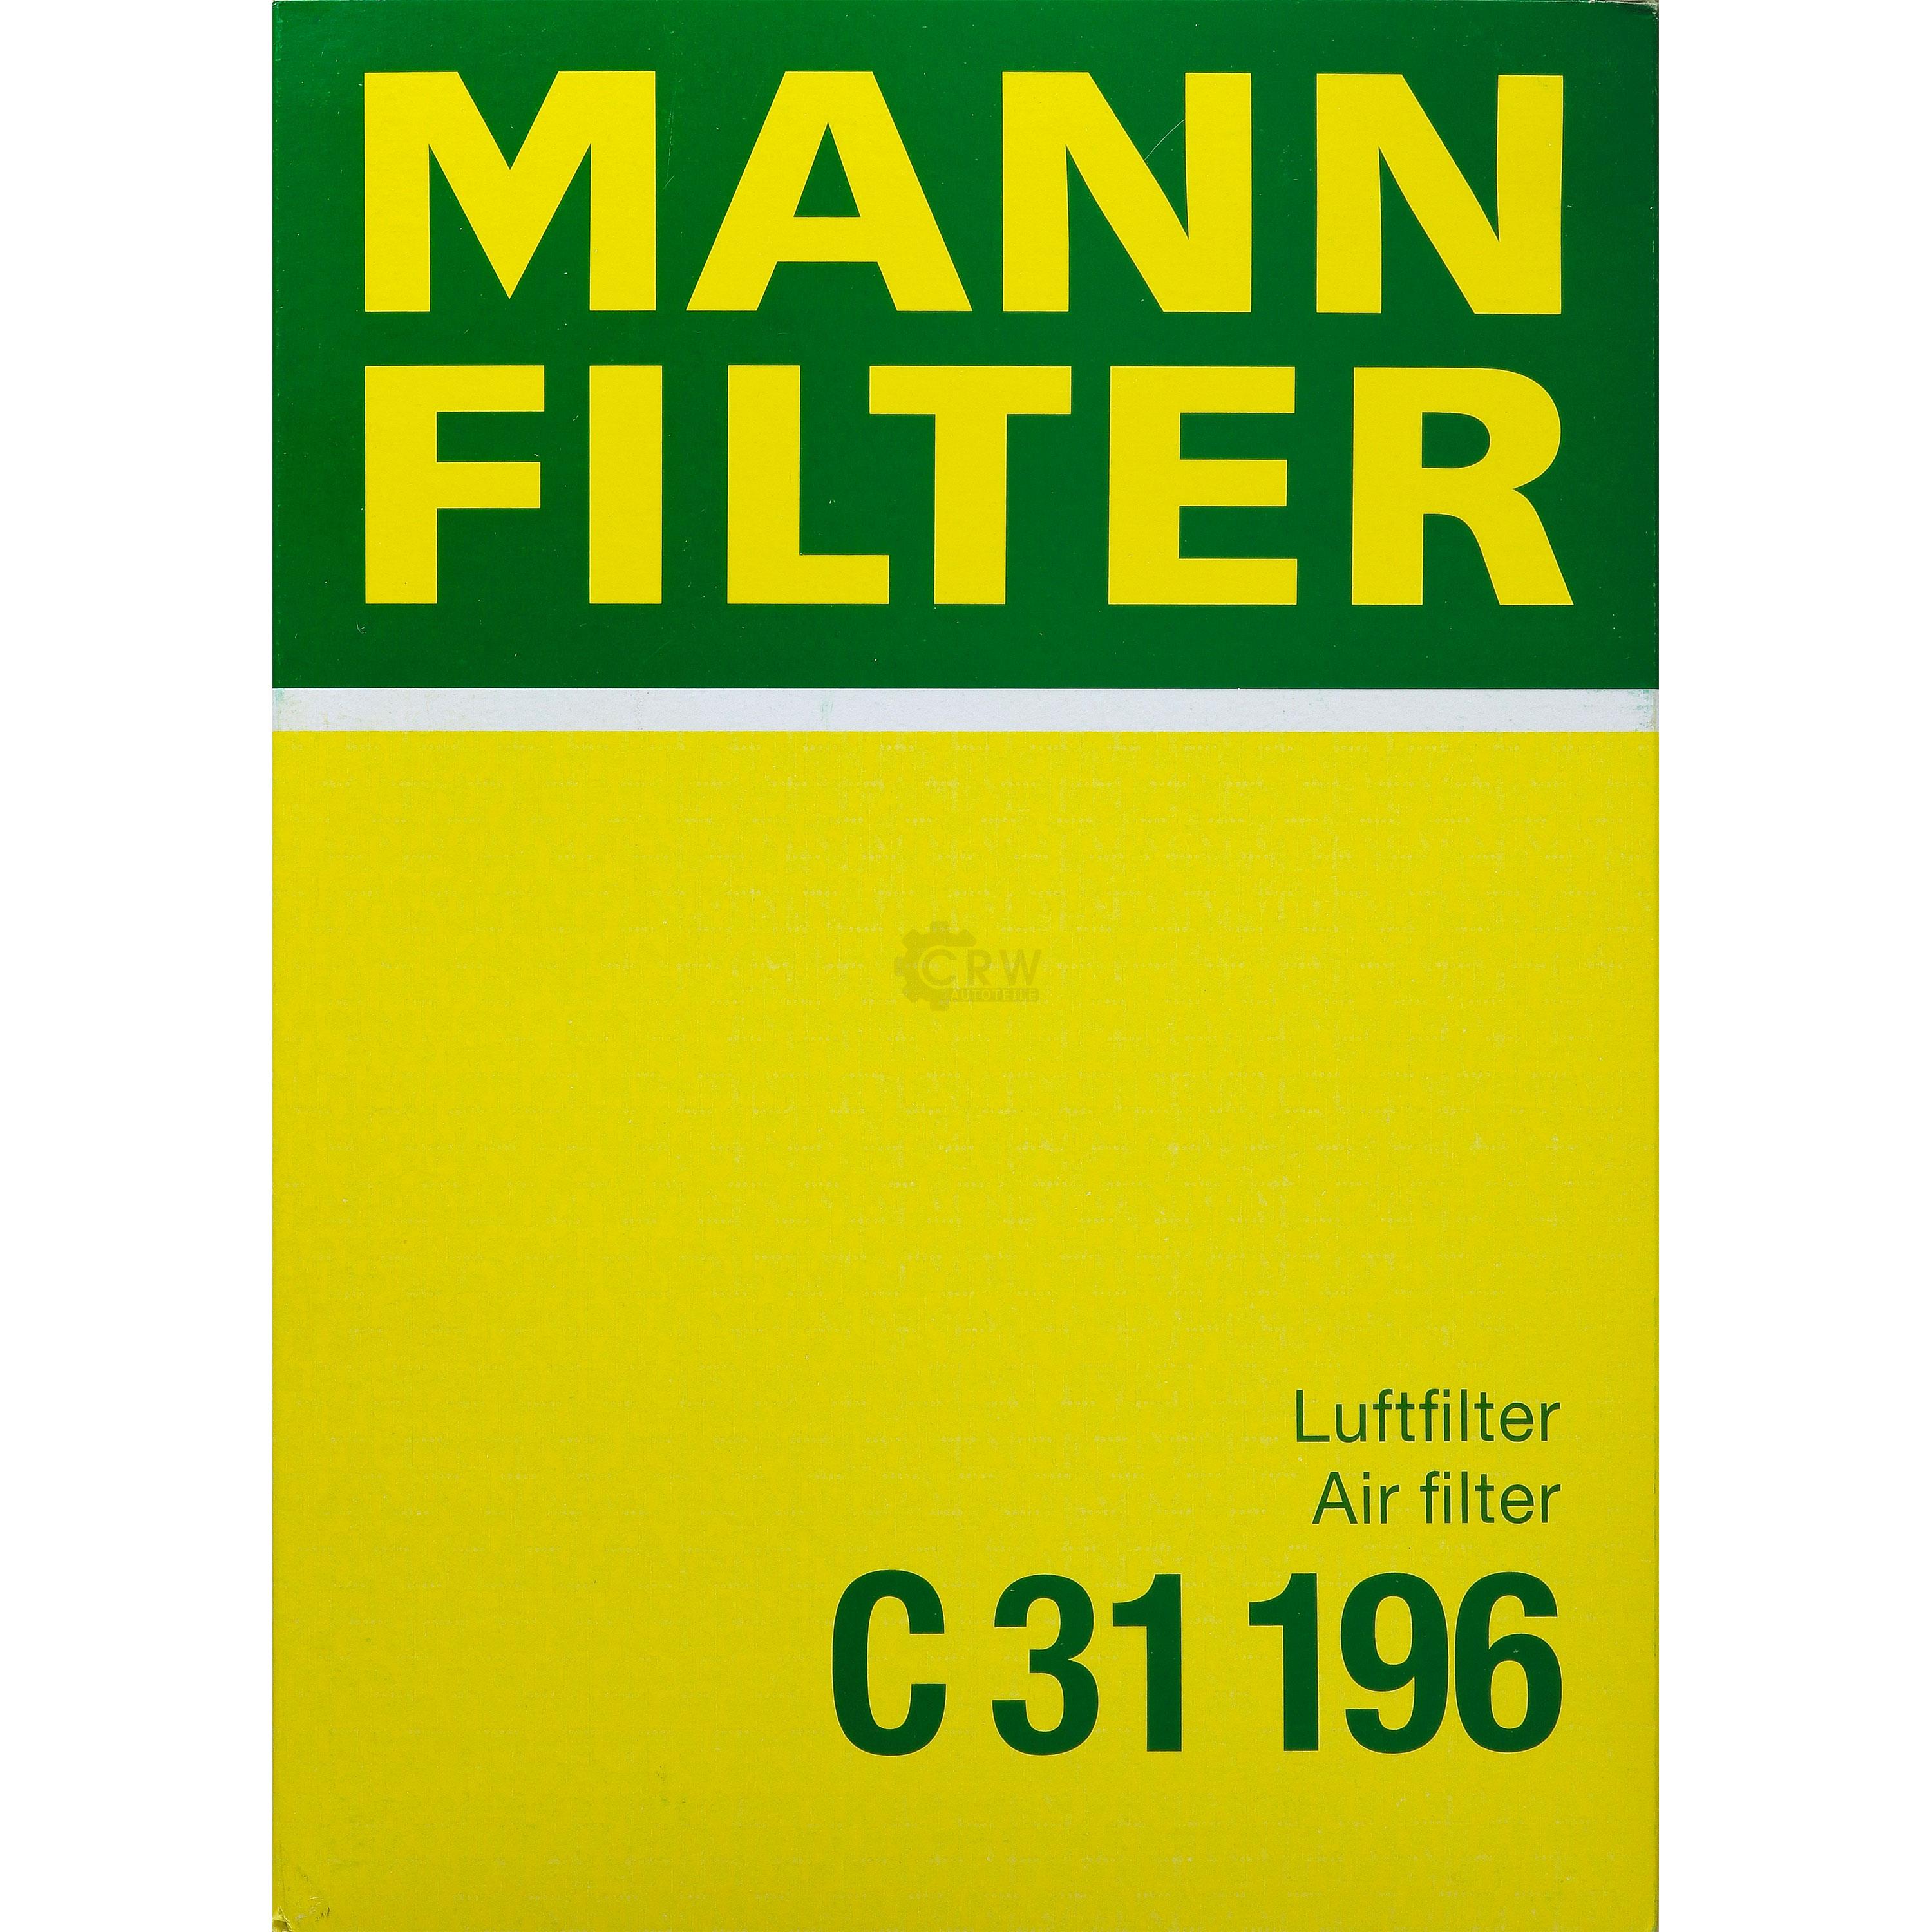 MANN-FILTER Luftfilter für Land Rover Discovery IV L319 3.0 SDV6 4x4 LA 2.7 TD